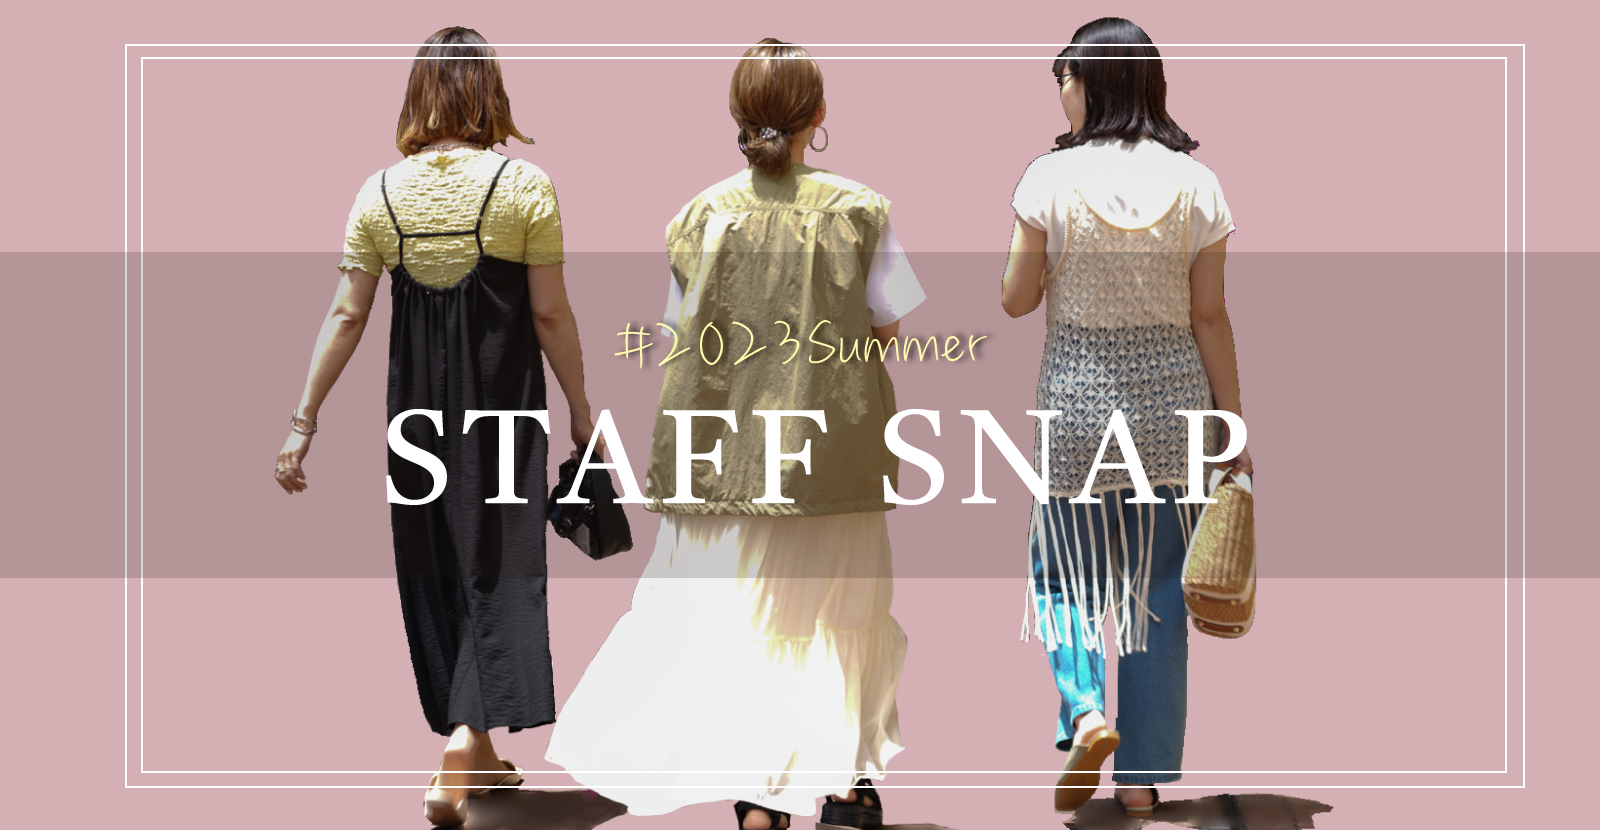 MV_staff-snap.jpg